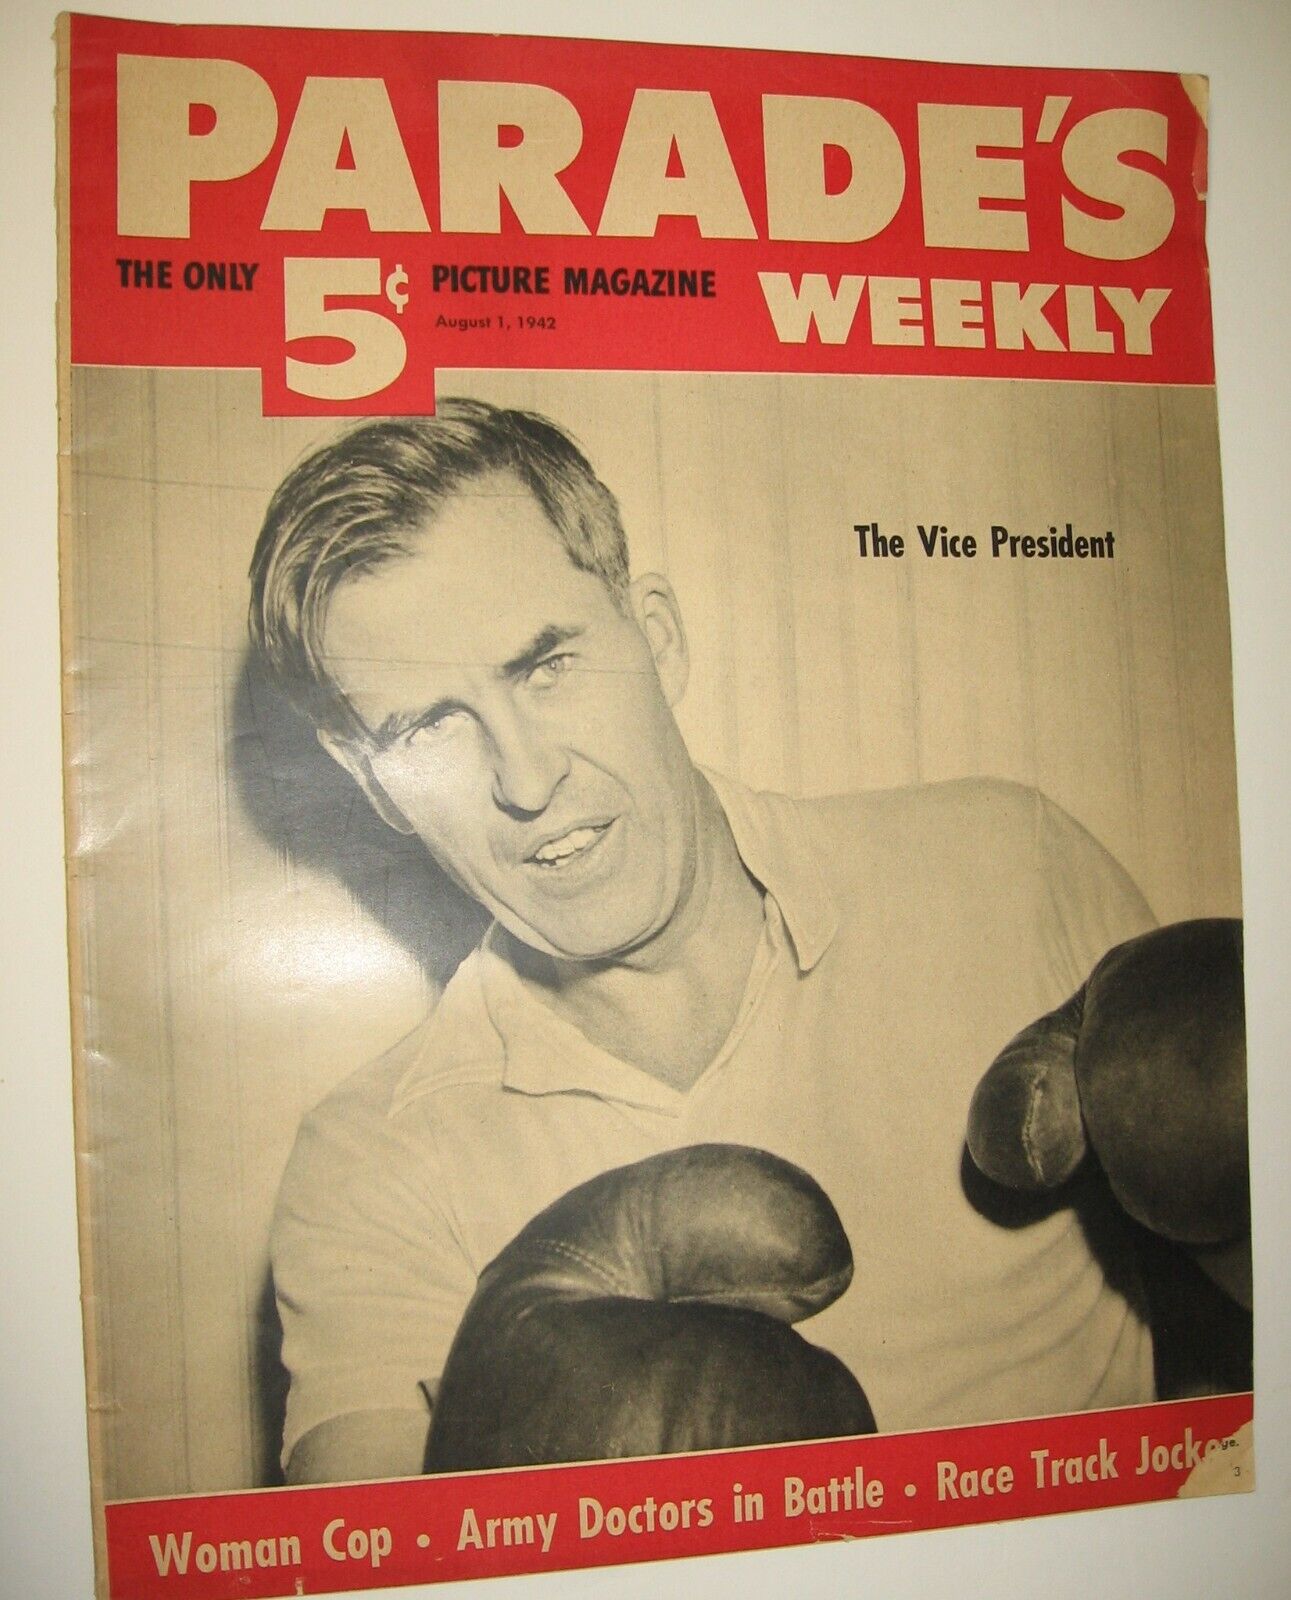 1942 Parade's Weekly Magazine Aug. 1, Vol. 1, No. 11, Vice-President, J. Stewart